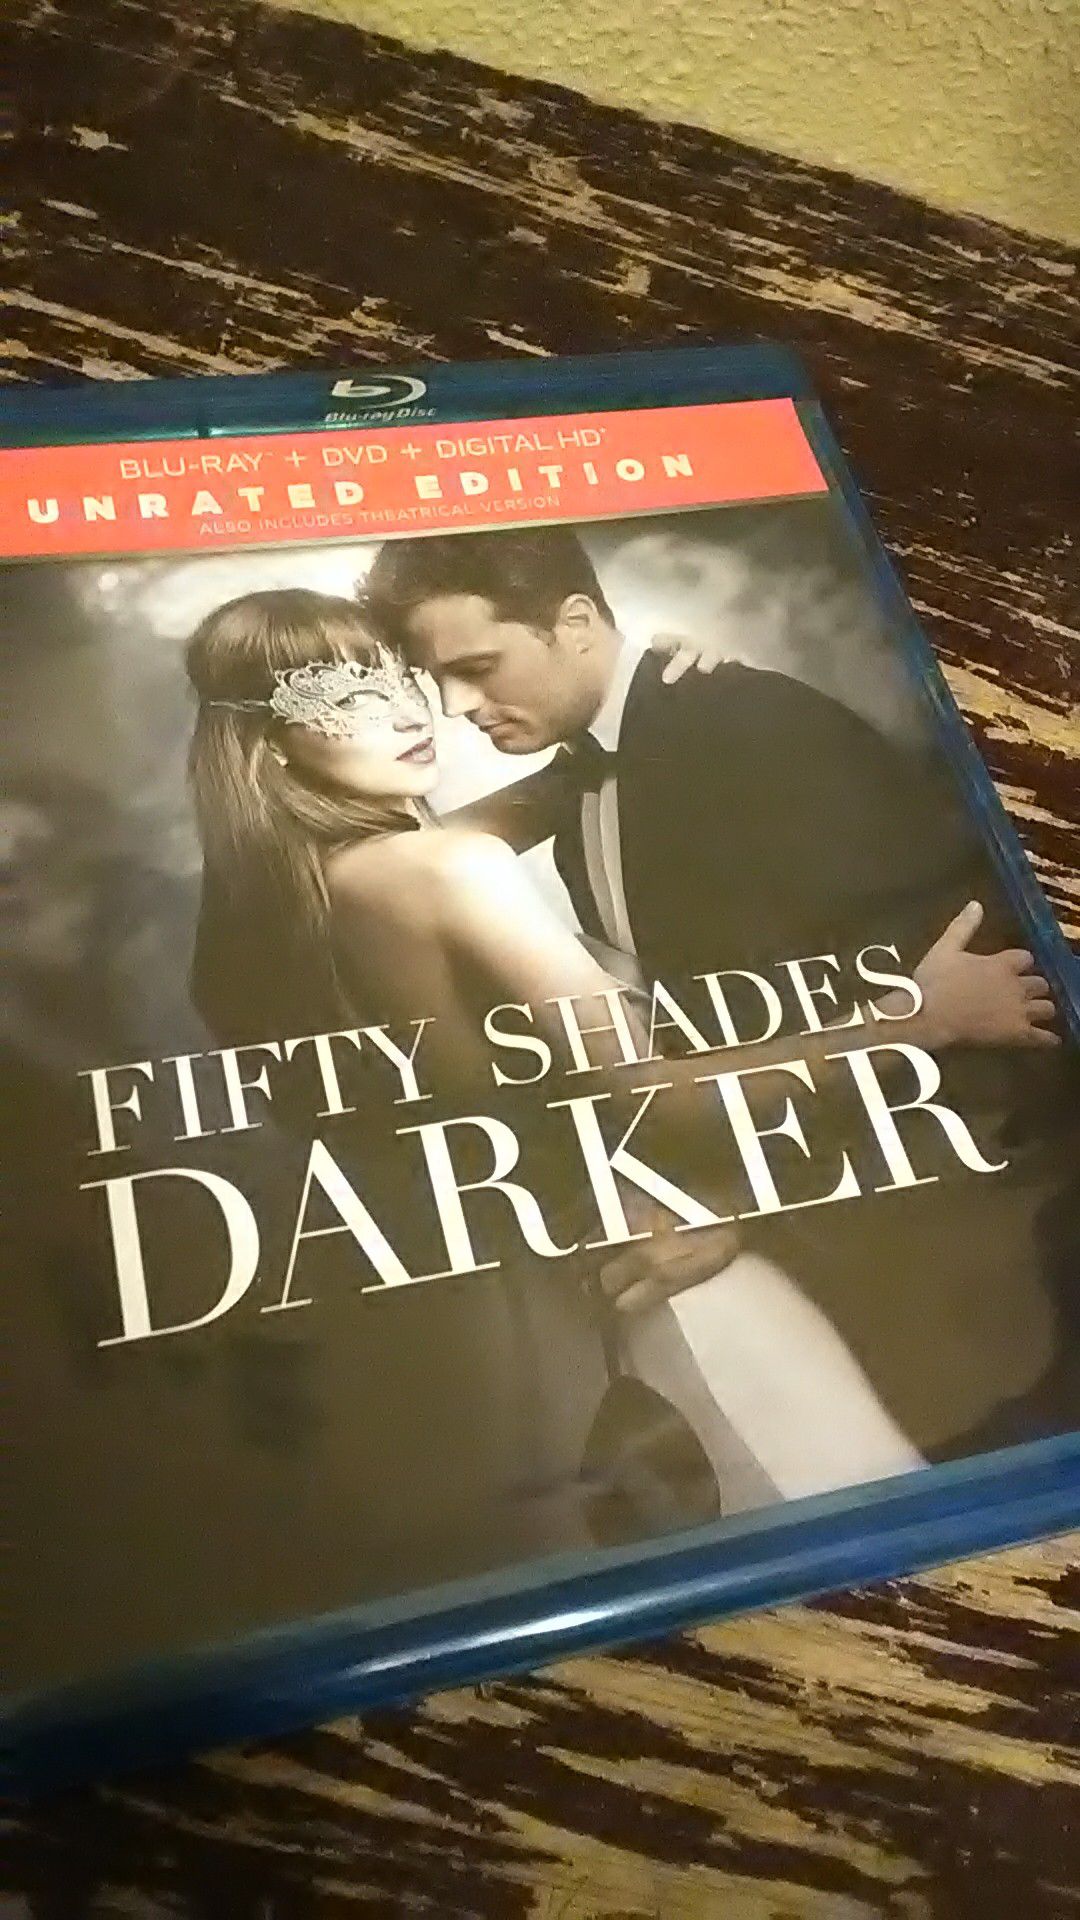 50 shades darker (only Blu-ray)